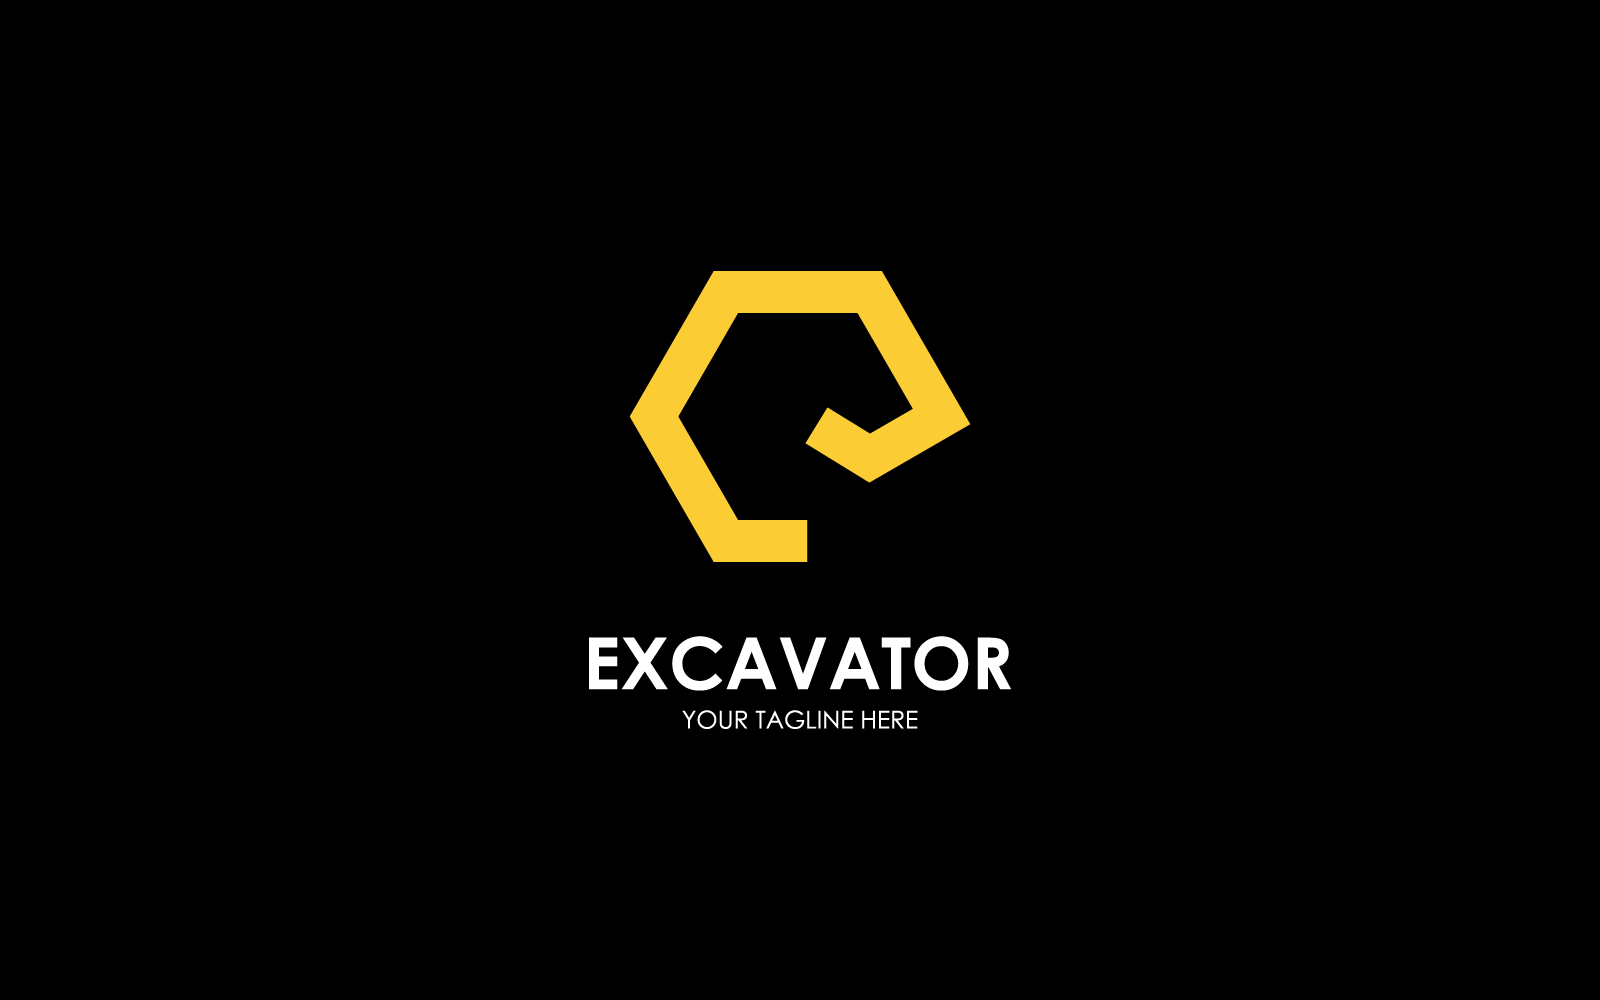 Excavator logo design vector illustration template